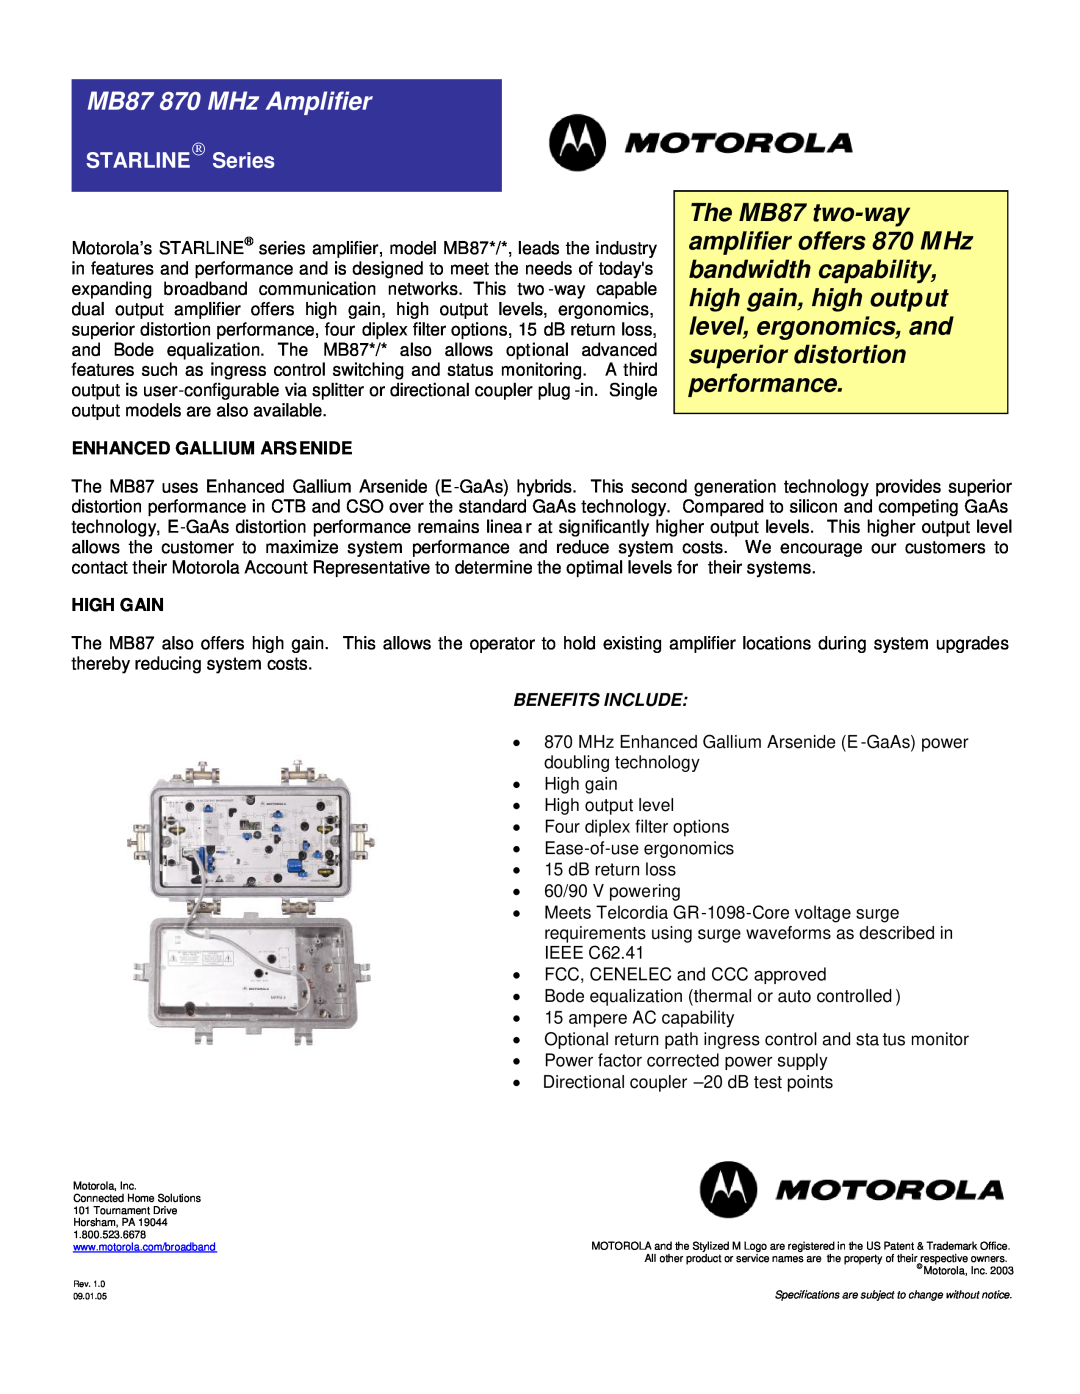 Motorola specifications STARLINE Series, Enhanced Gallium Arsenide, High Gain, MB87 870 MHz Amplifier, Benefits Include 